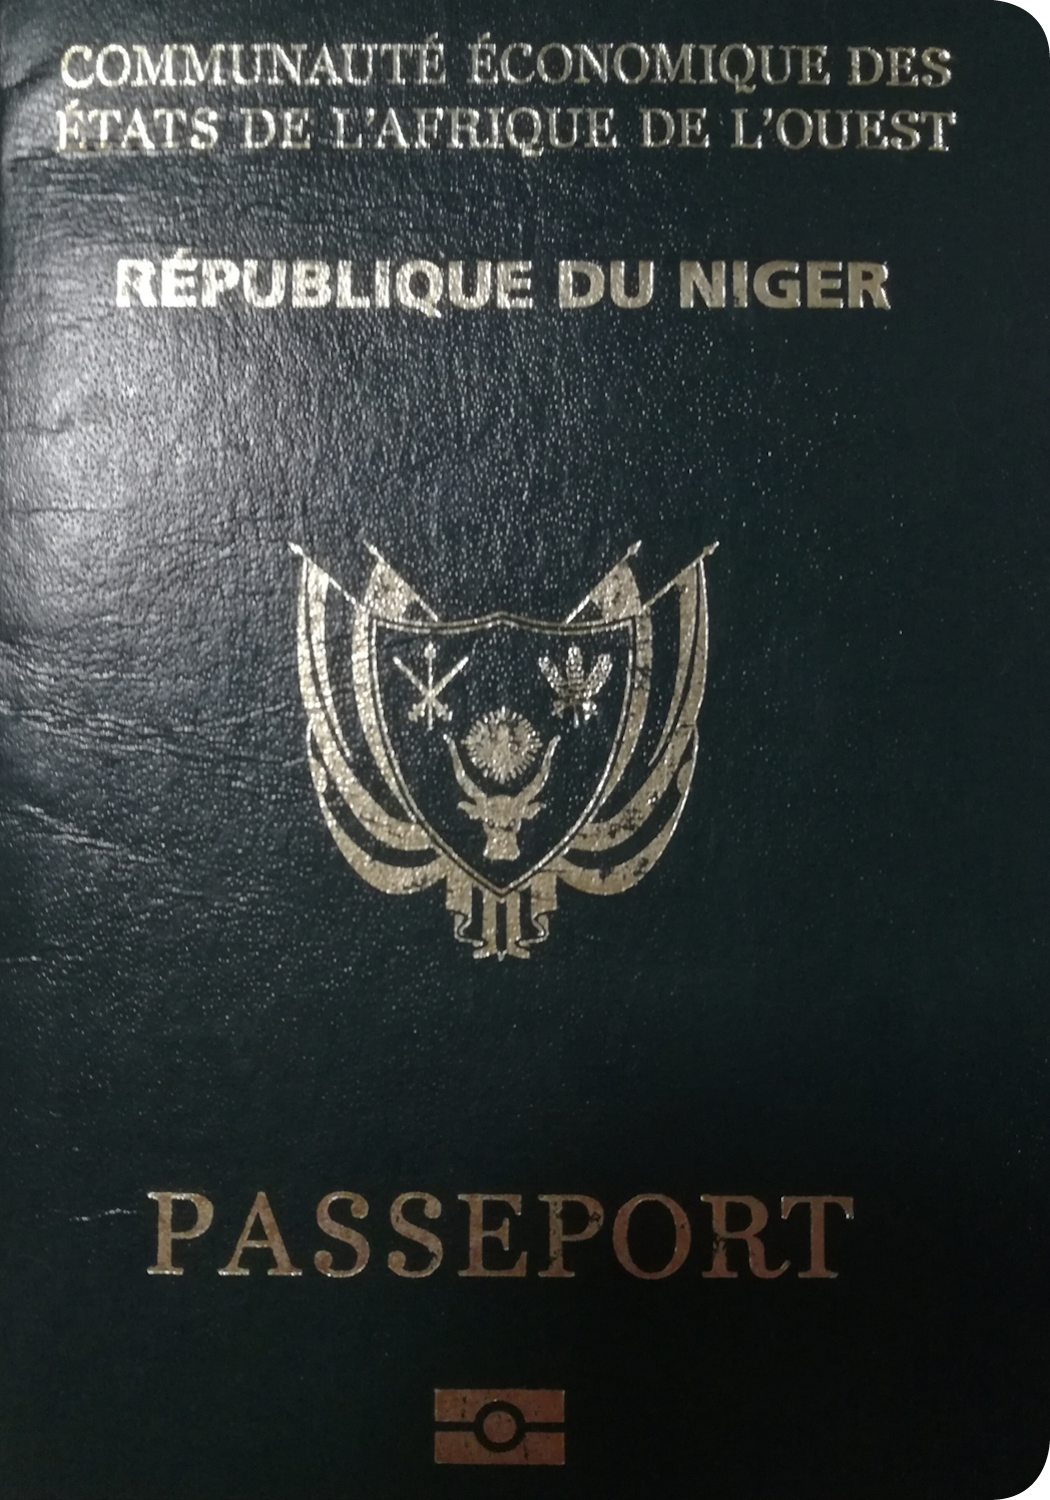 A regular or ordinary Nigerian passport - Front side